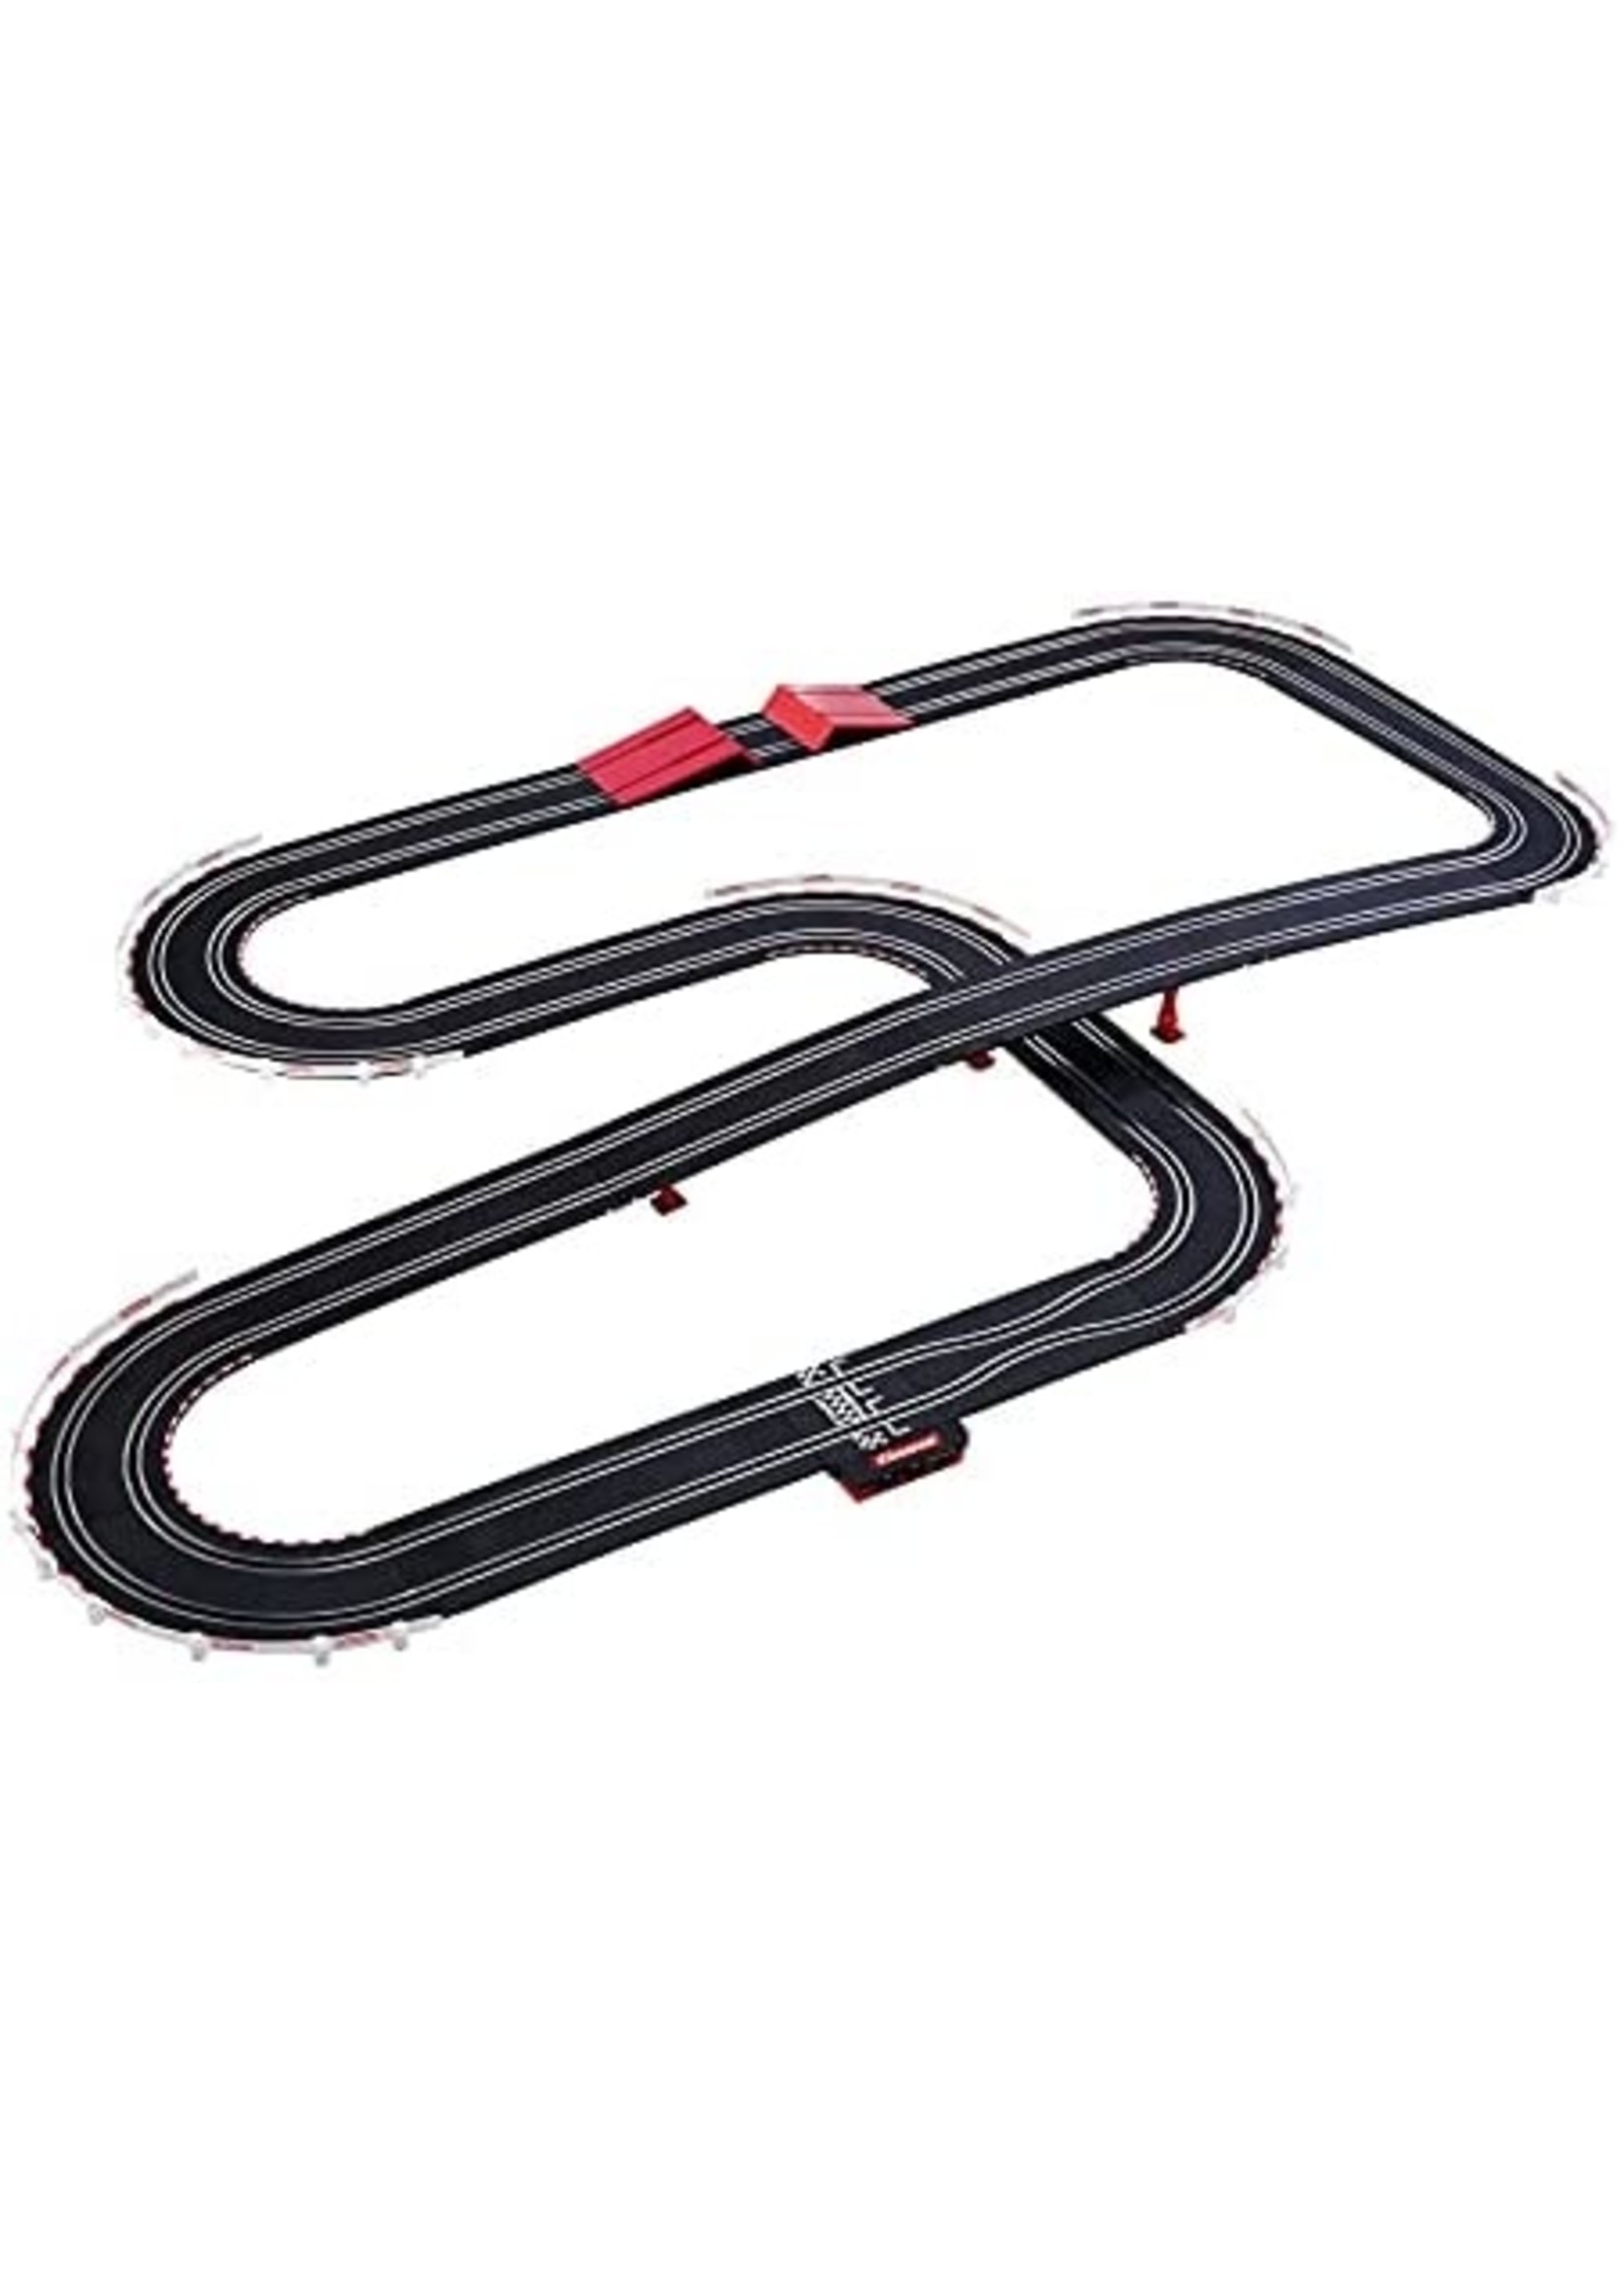 Carrera Build 'n Race - Racing Set 6.2